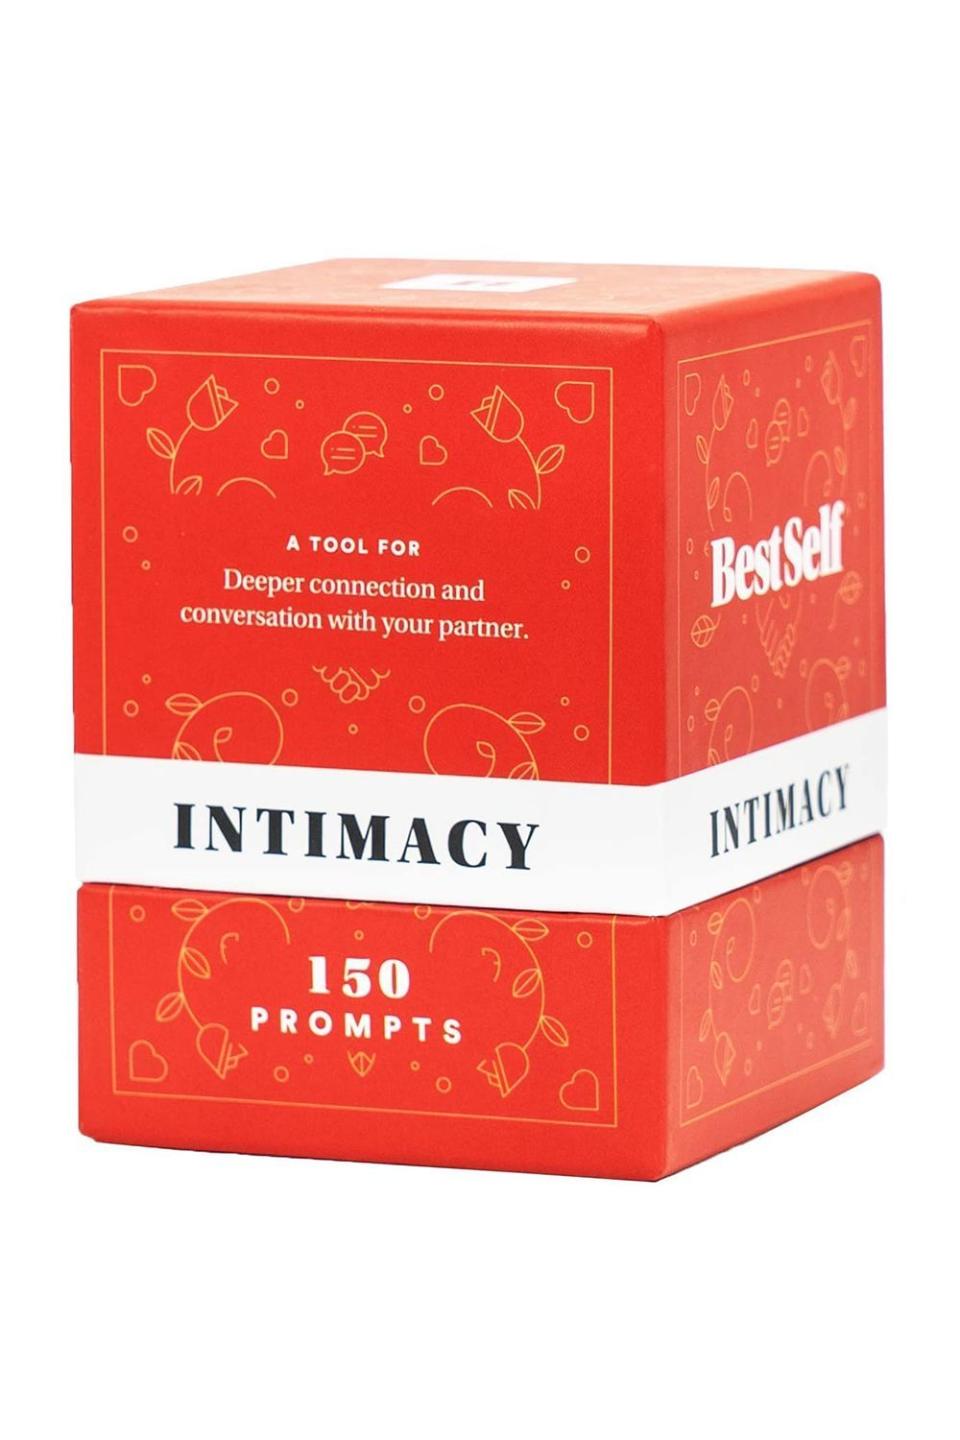 41) Intimacy Deck